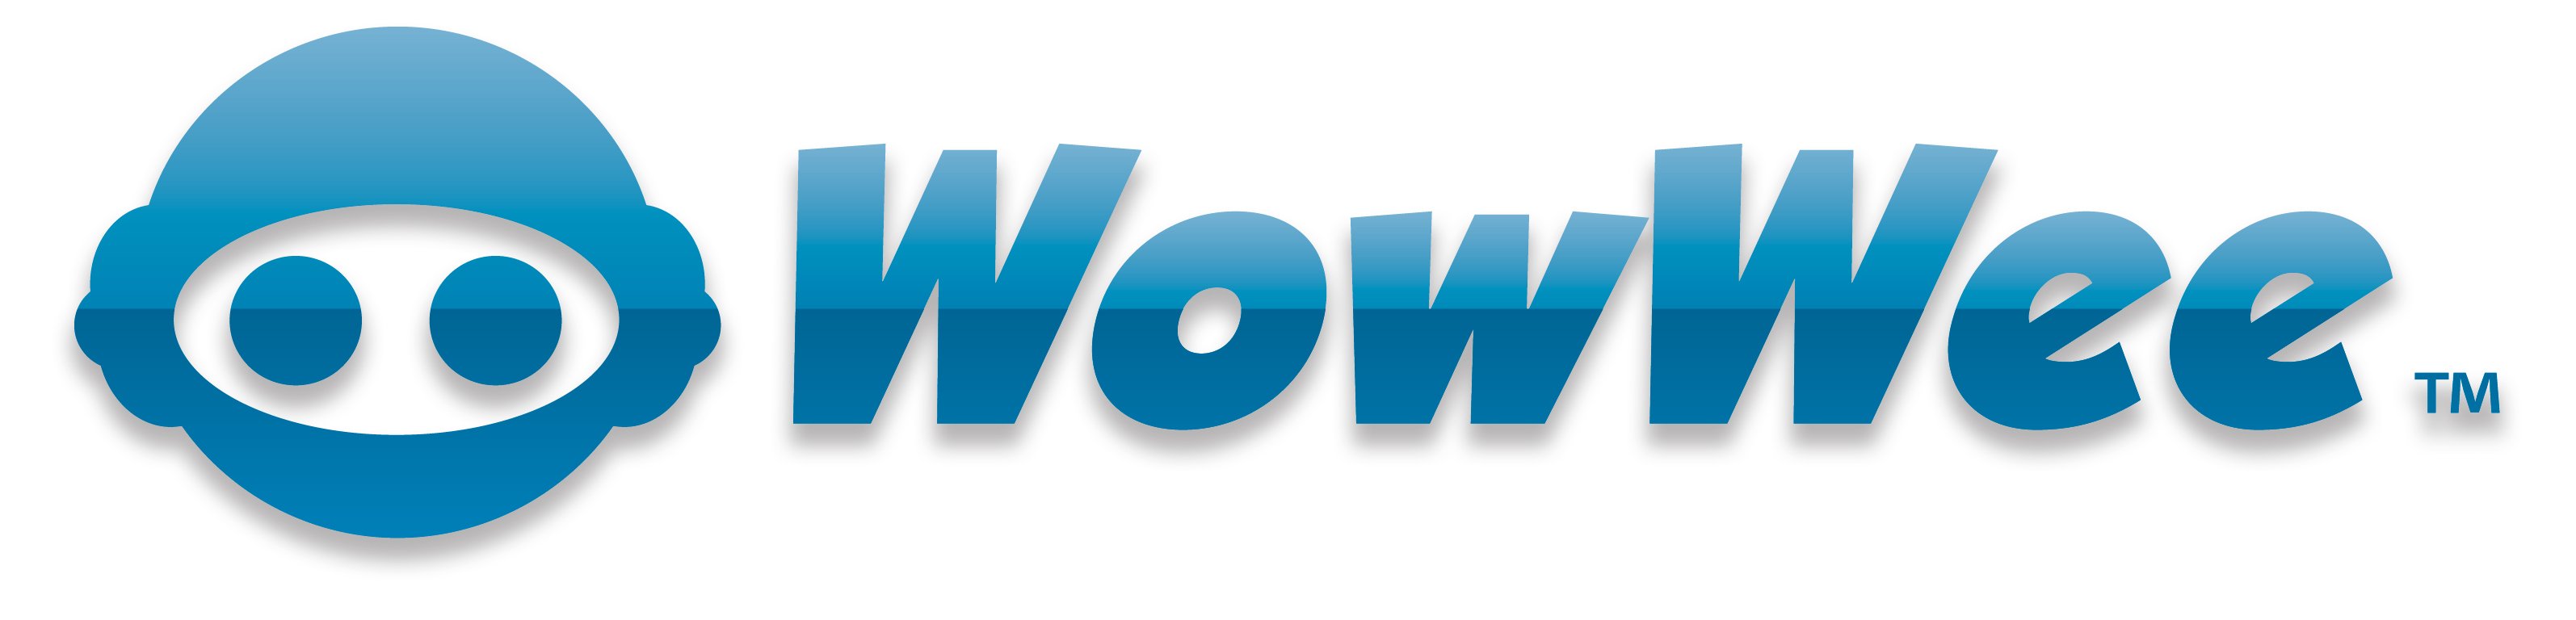 wowwee_logo